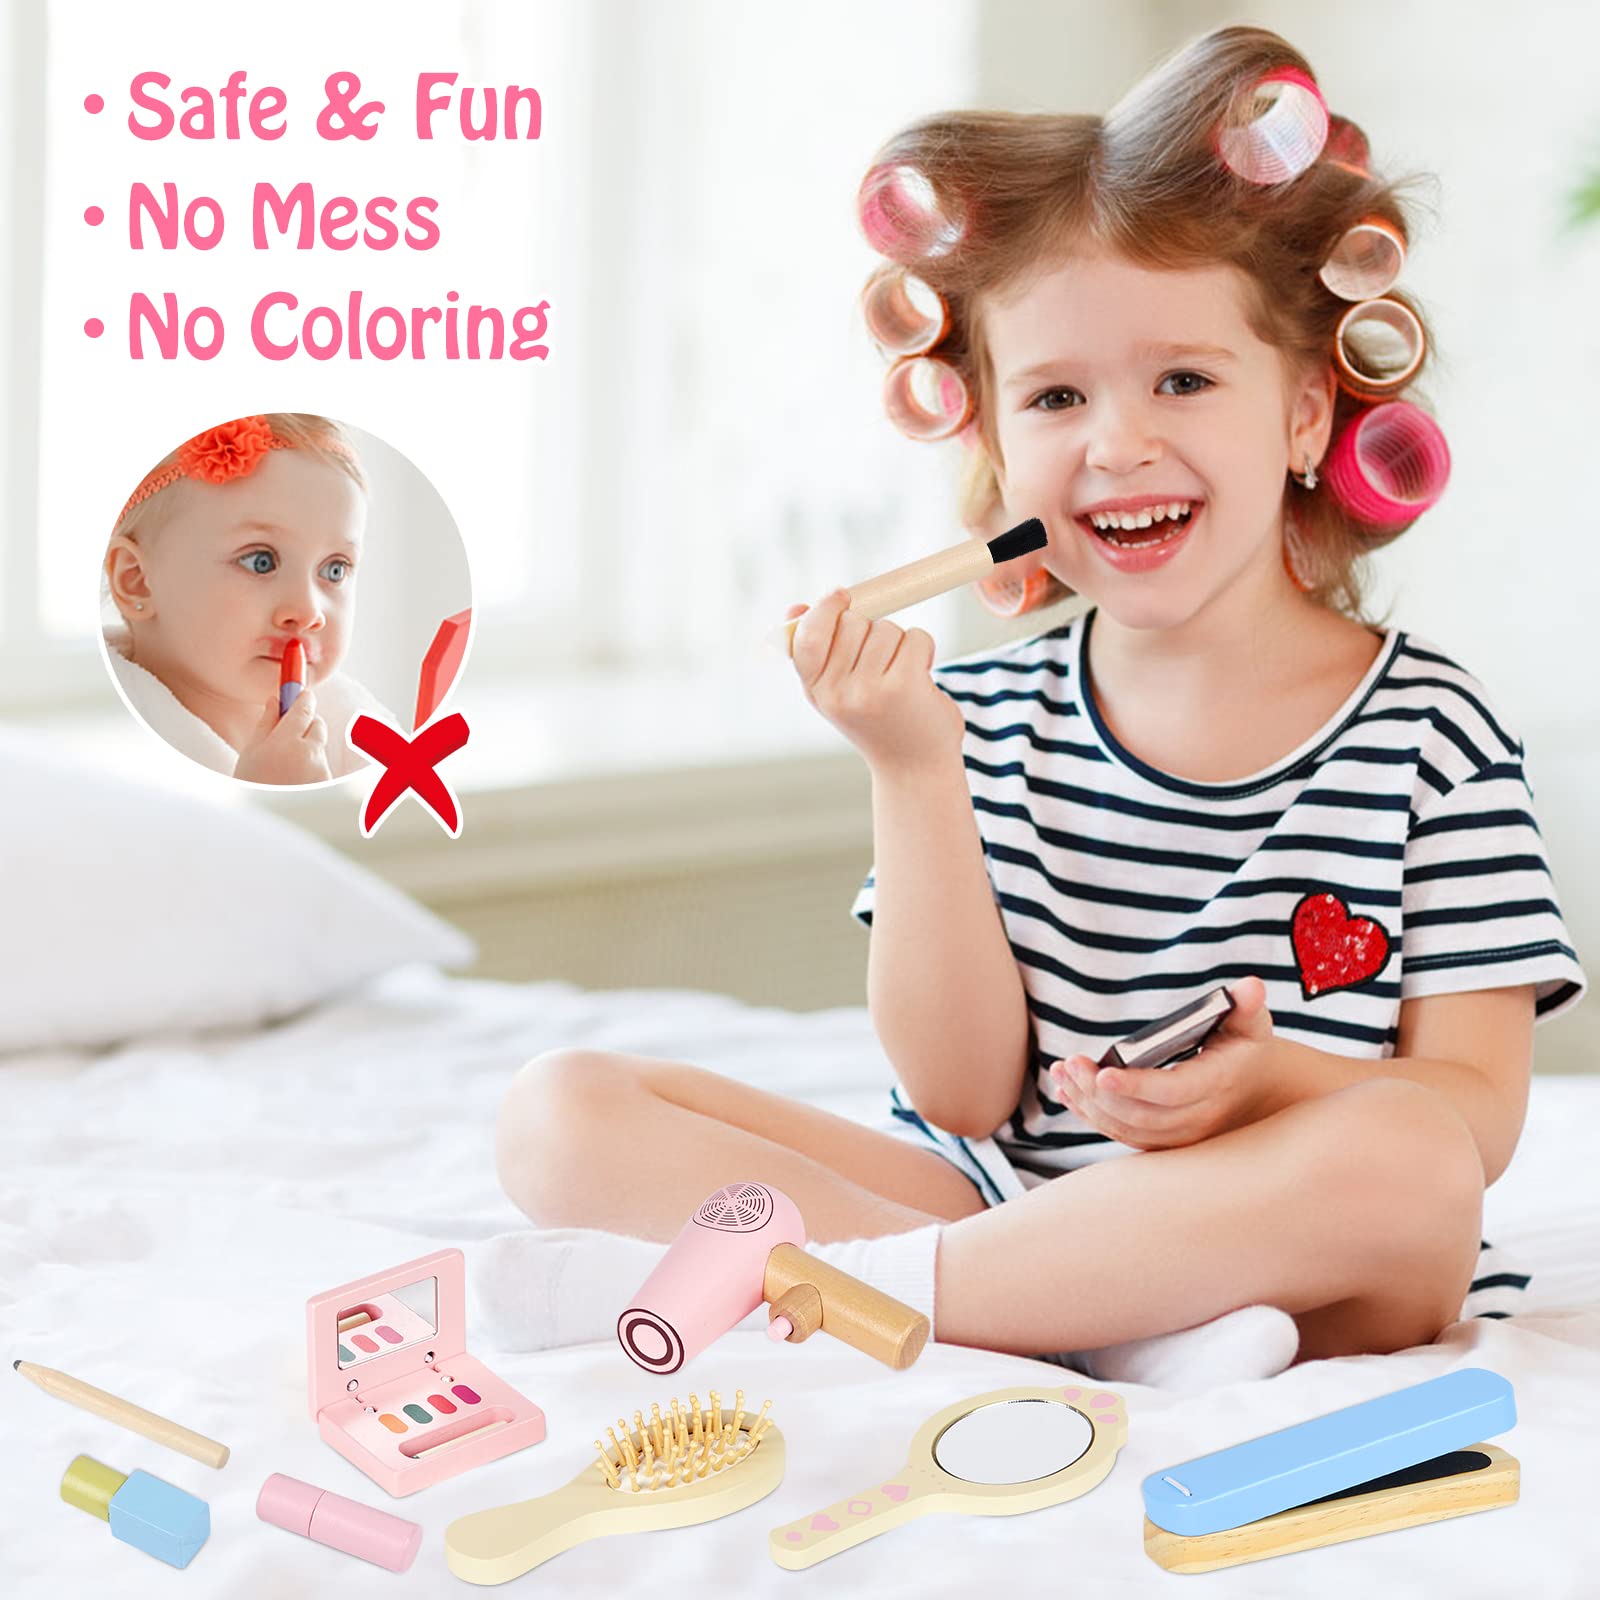 Wooden Makeup Kit Toy, Toddler Pretend Beauty Salon Set, 12PCS Makeup Playset with Hair Dryer, Mirror, Perfume and Storage Bag